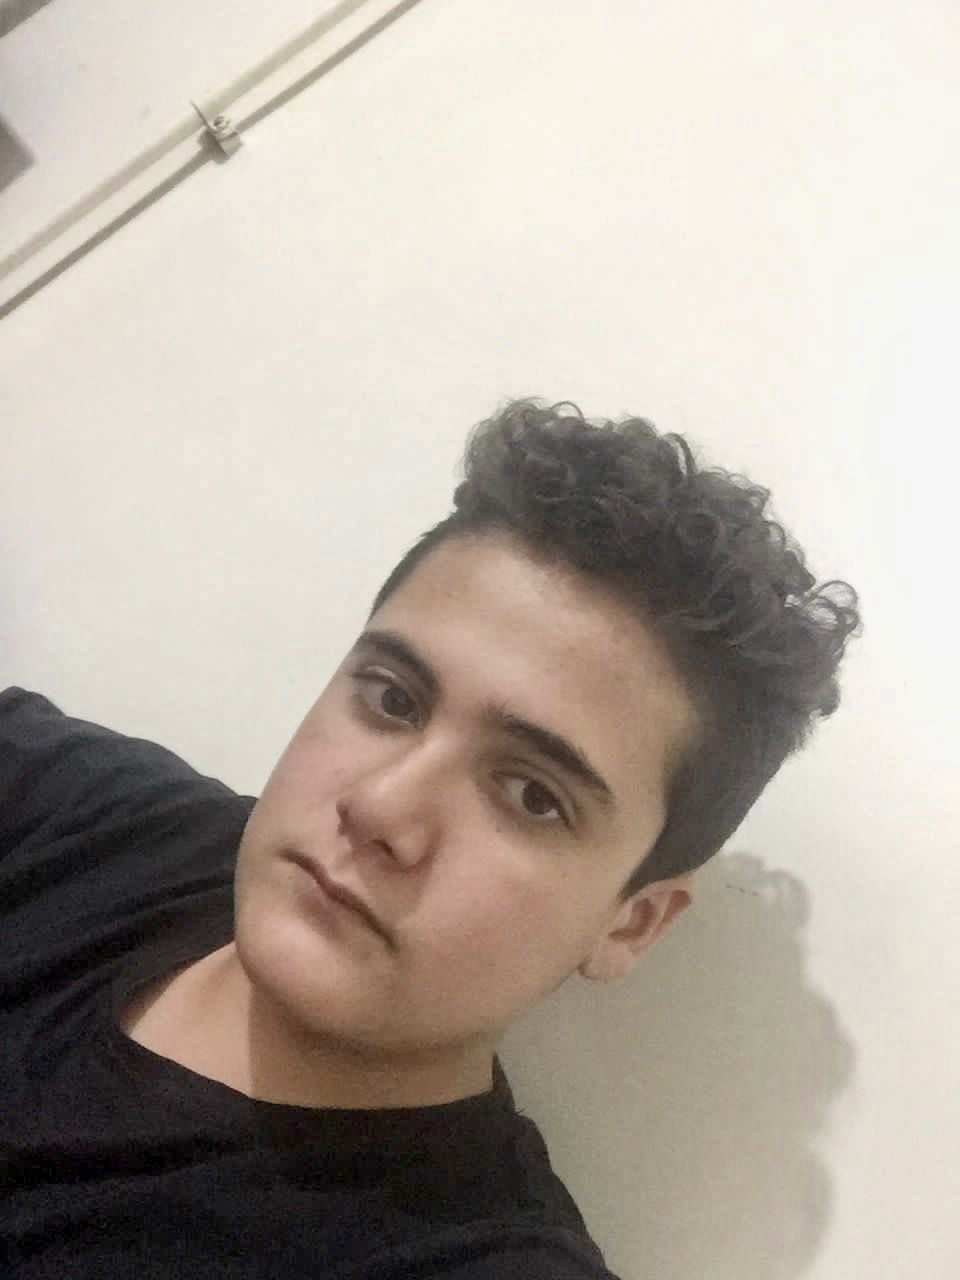 Sepehr Maghsoudi  iran boy killed izeh protest